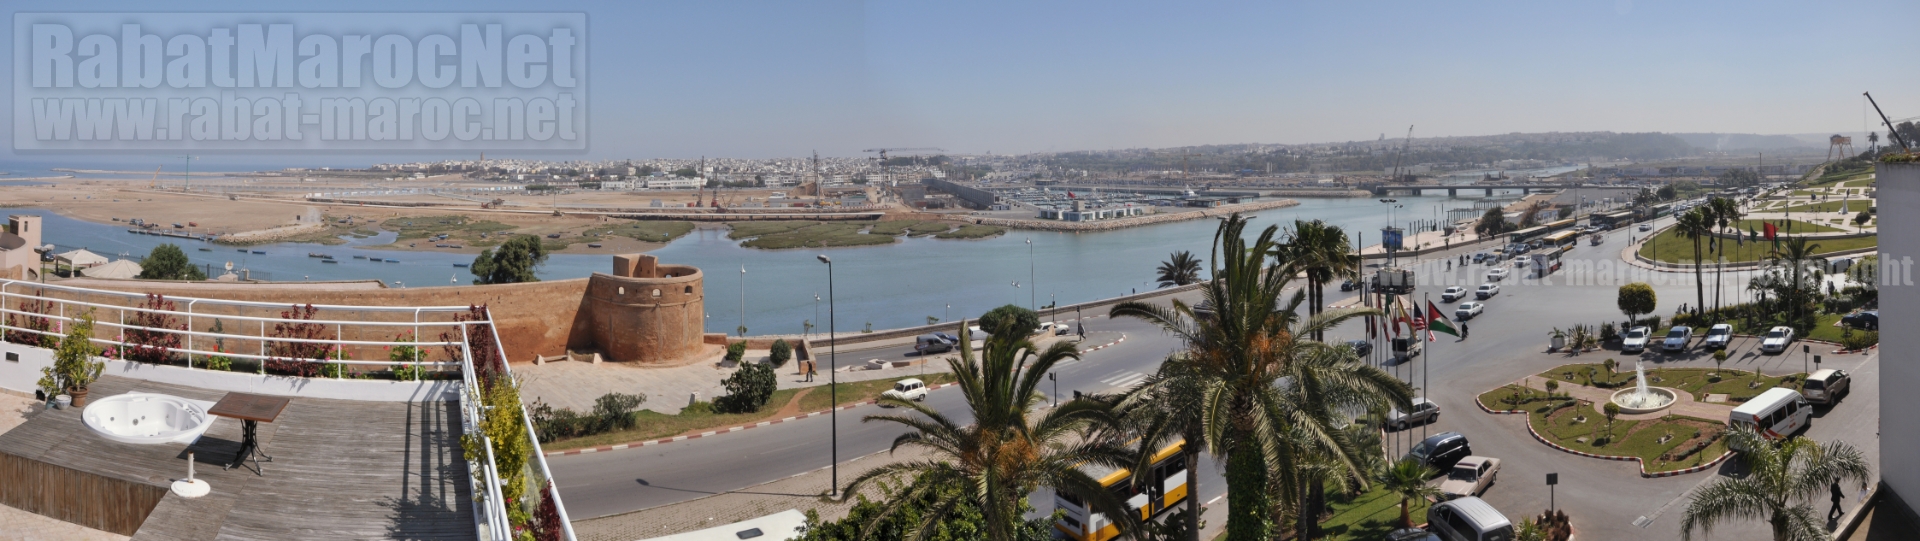 Panorama 18 Bouregreg depuis le pont moulay hassan jusqu au debarcadere